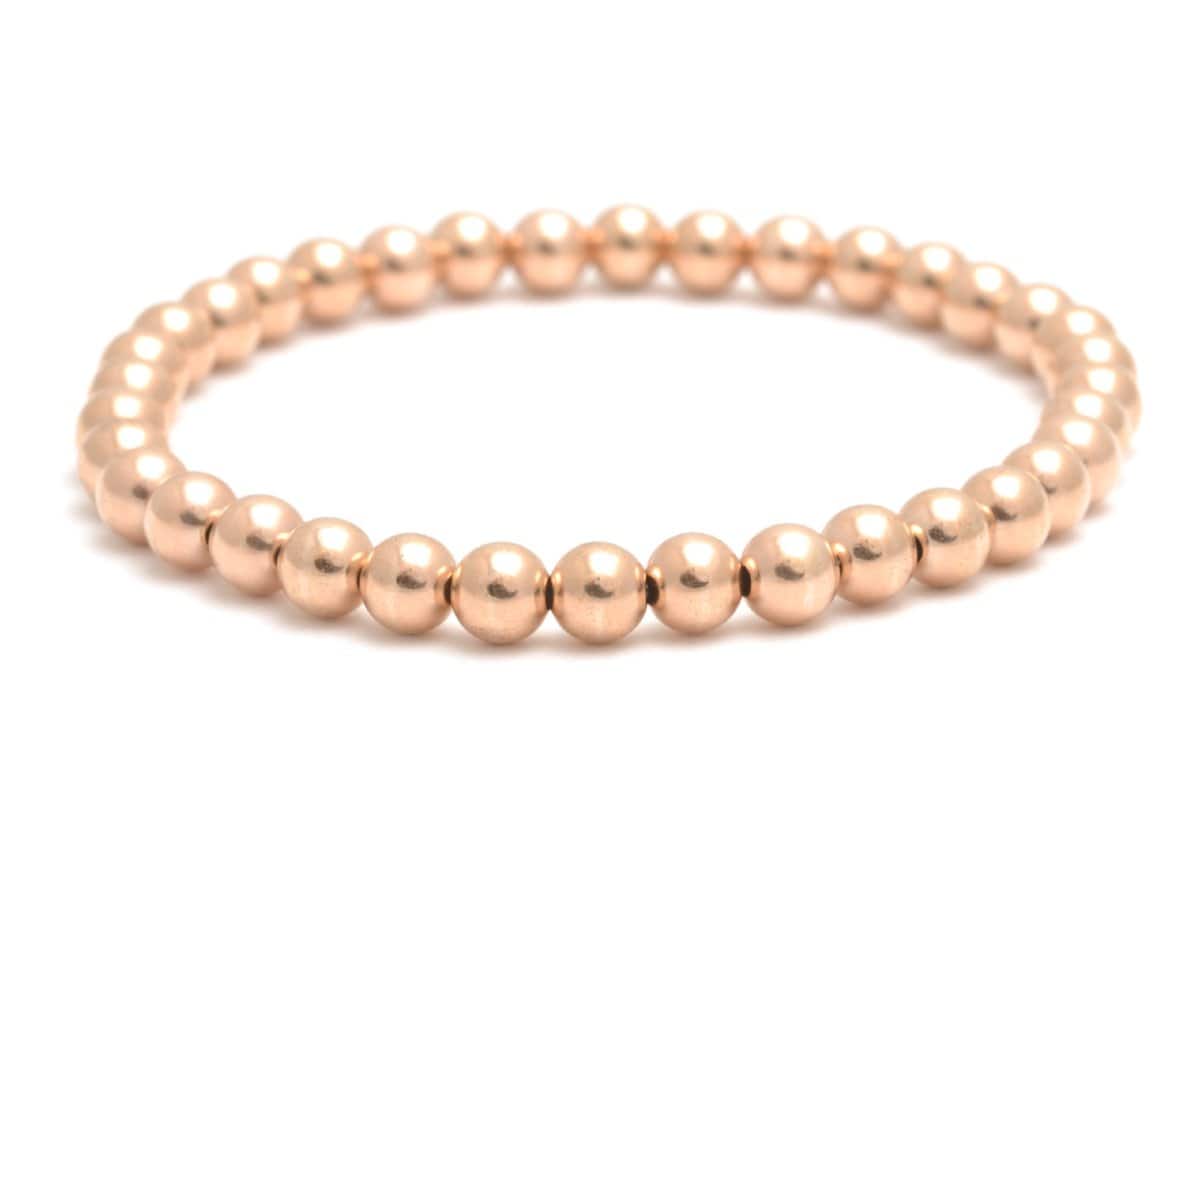 5mm rose gold round bead bracelet